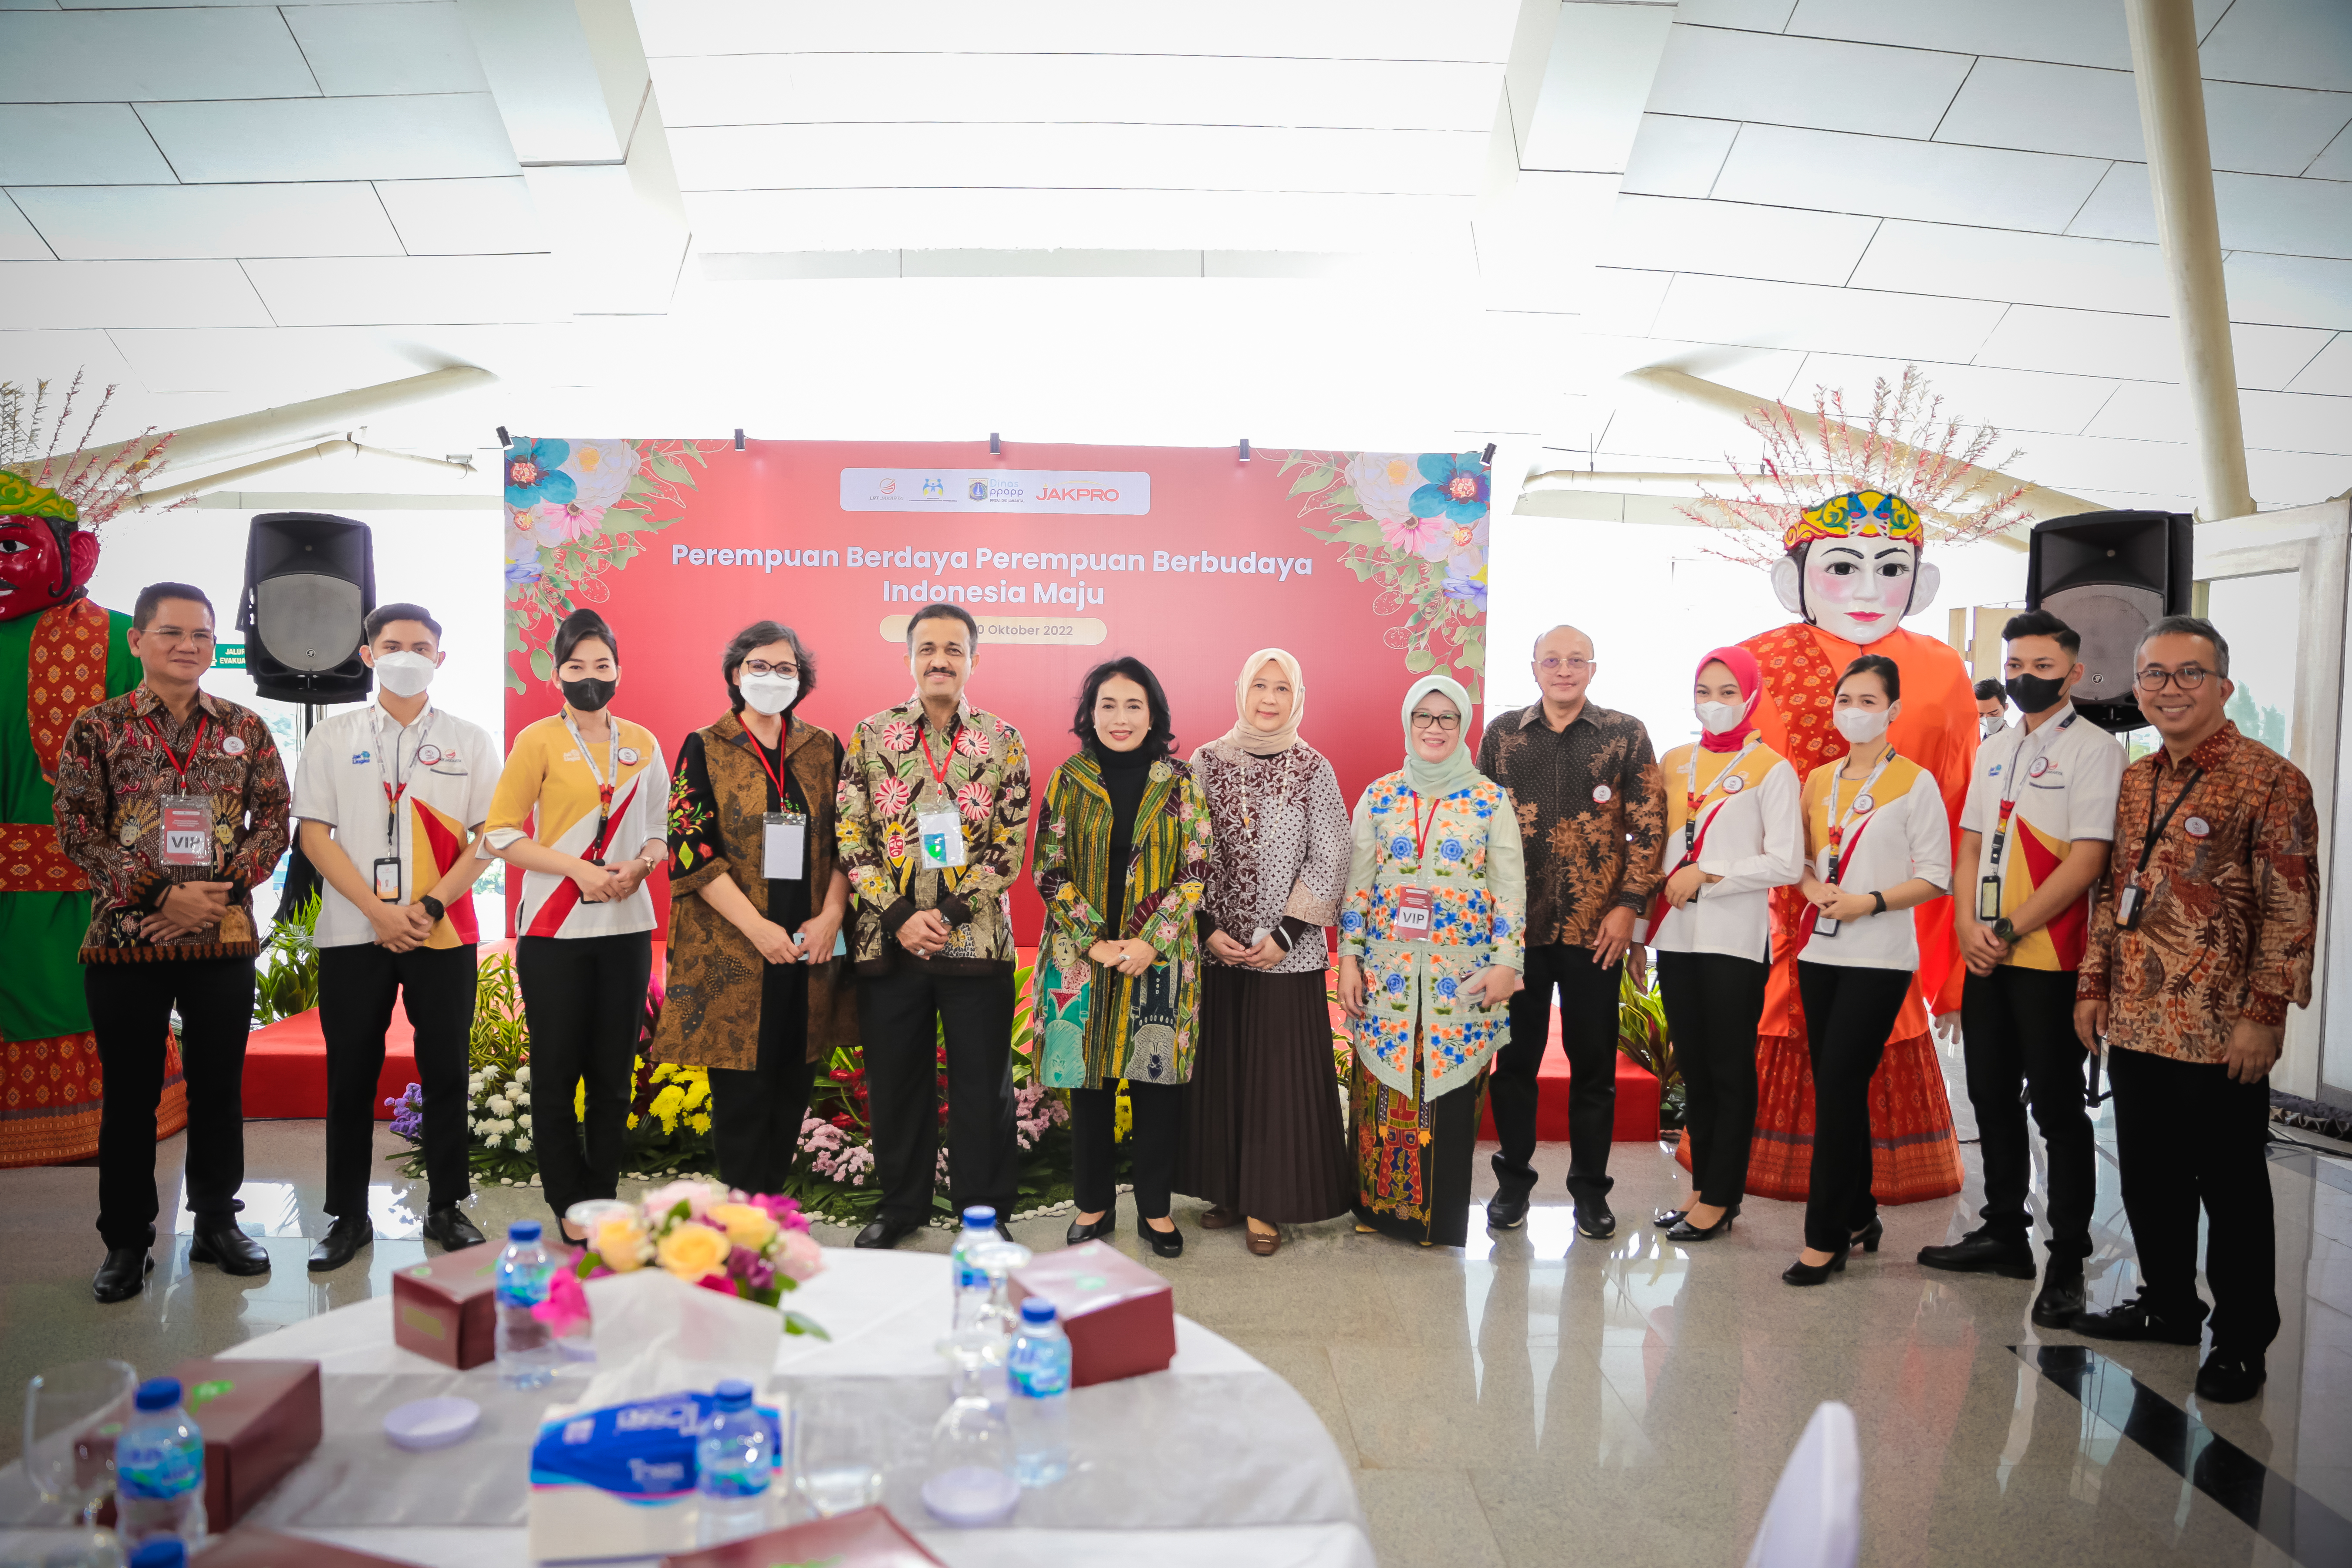 Acara Perempuan Berdaya Perempuan Berbudaya Indonesia Maju dengan DPPAPP 2022